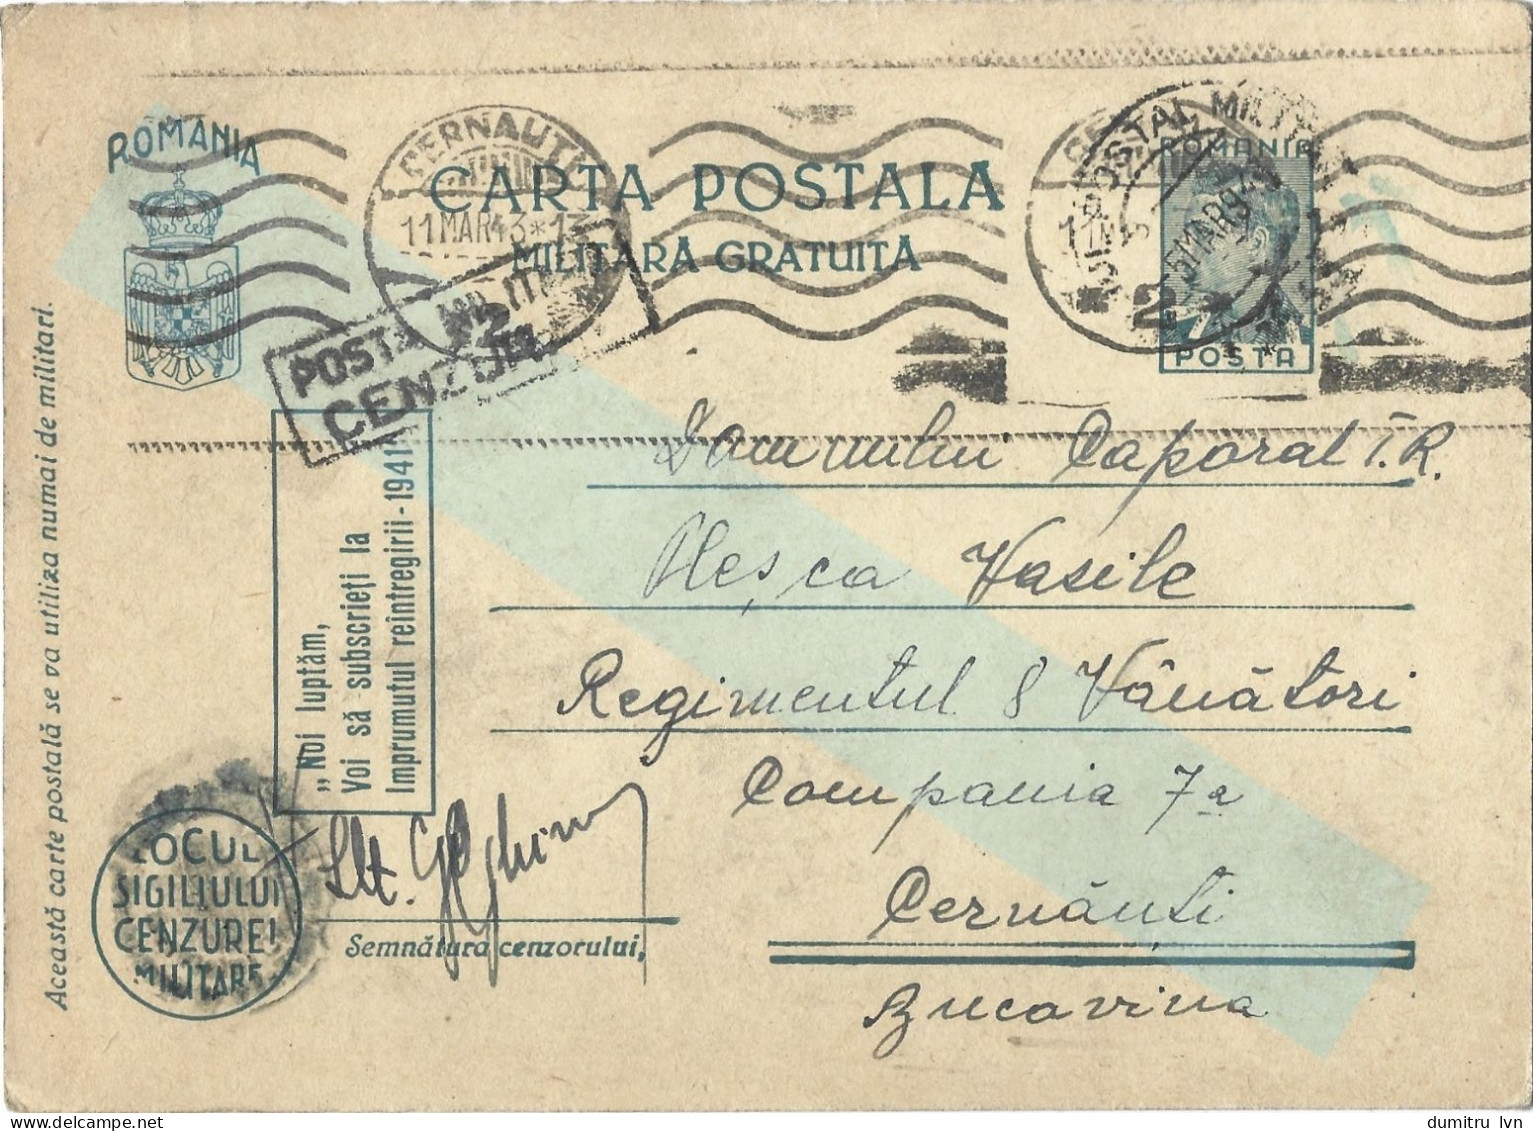 ROMANIA 1943 CERNAUTI, CENSORED, OPM.Nr.33, FREE MILITARY, WW2 POSTCARD STATIONERY - World War 2 Letters